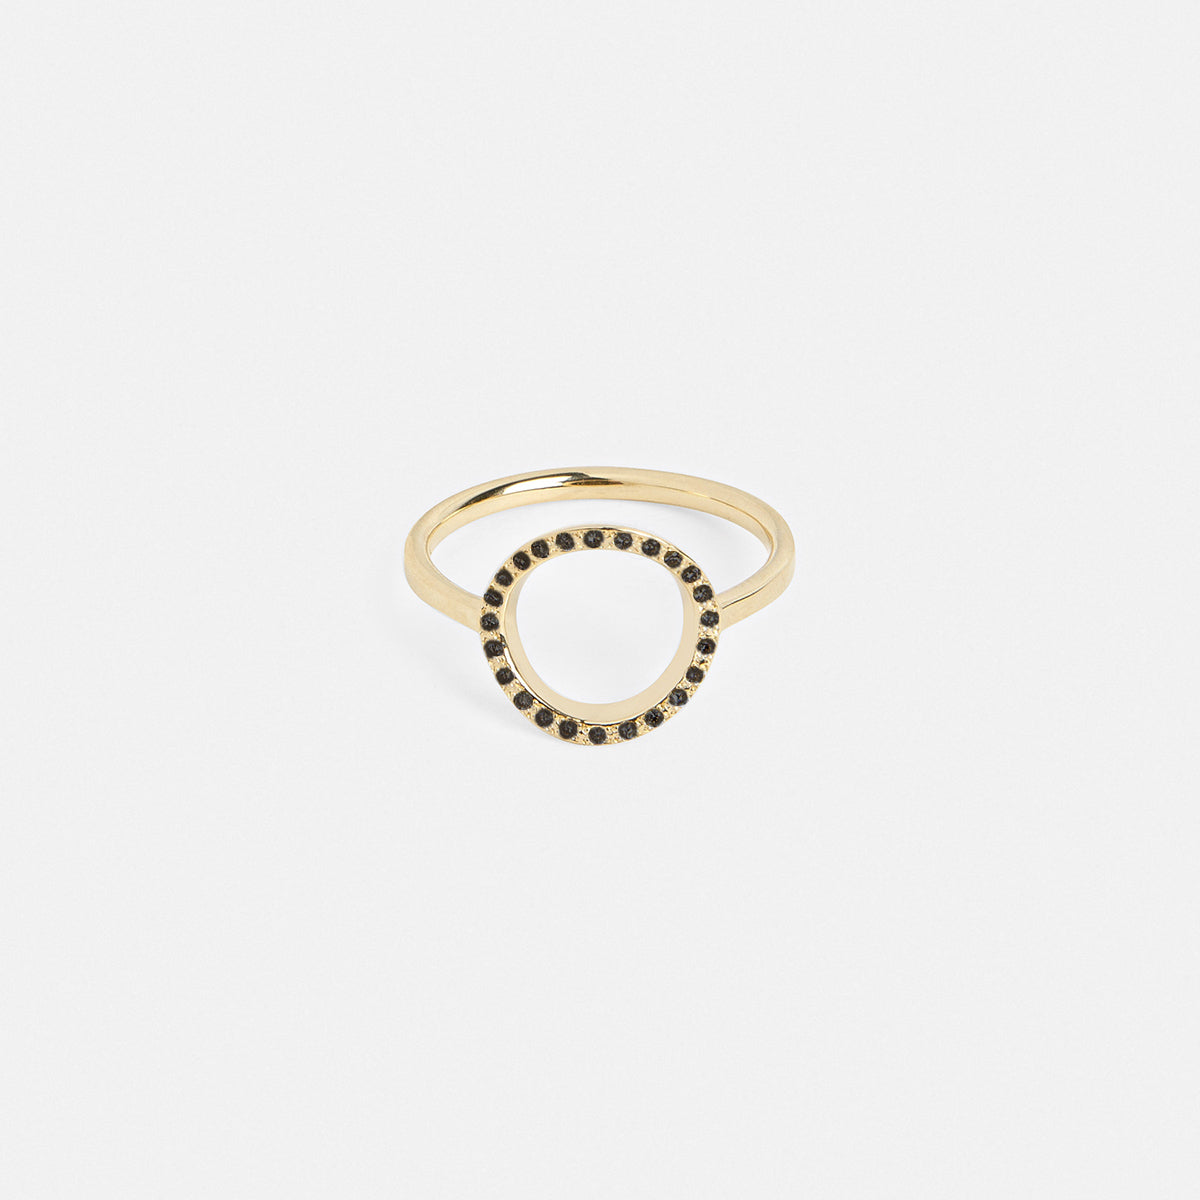 Nida Alternative Ring in 14k Gold set with Black Diamonds by SHW Fine Jewelry